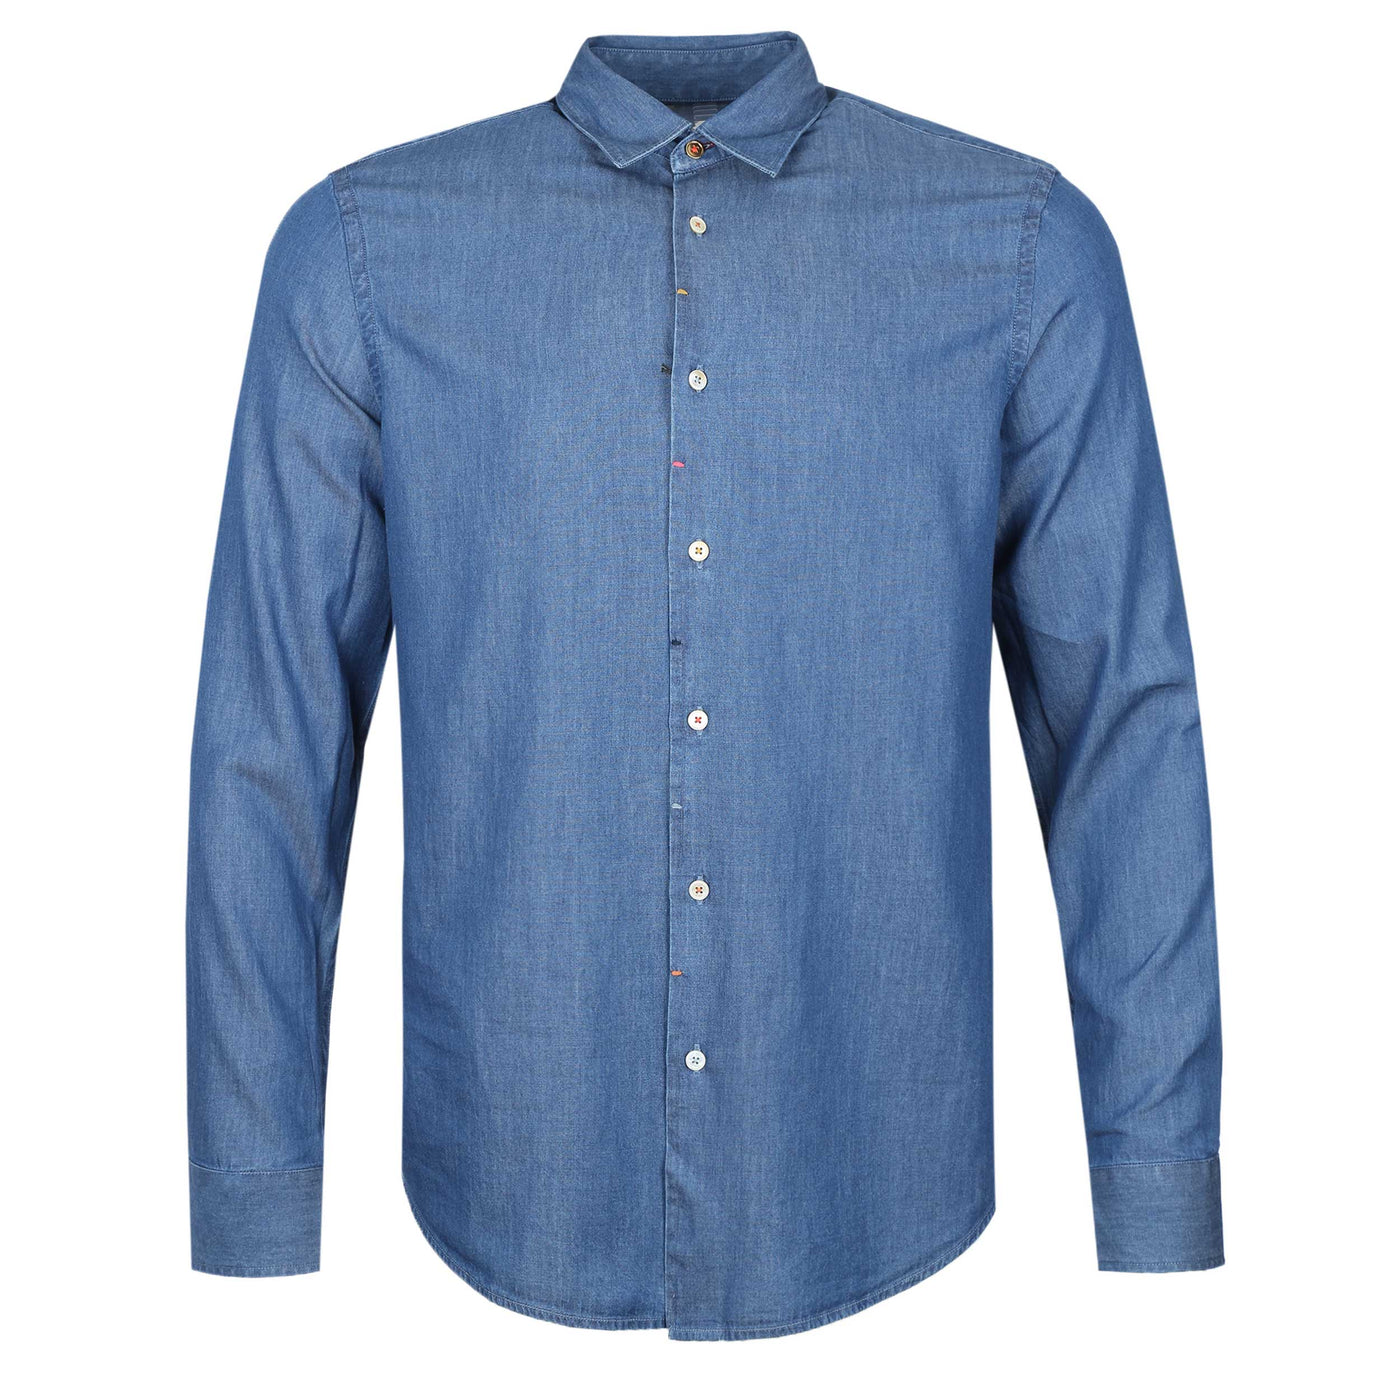 Paul Smith Regular Fit Shirt in Denim Blue